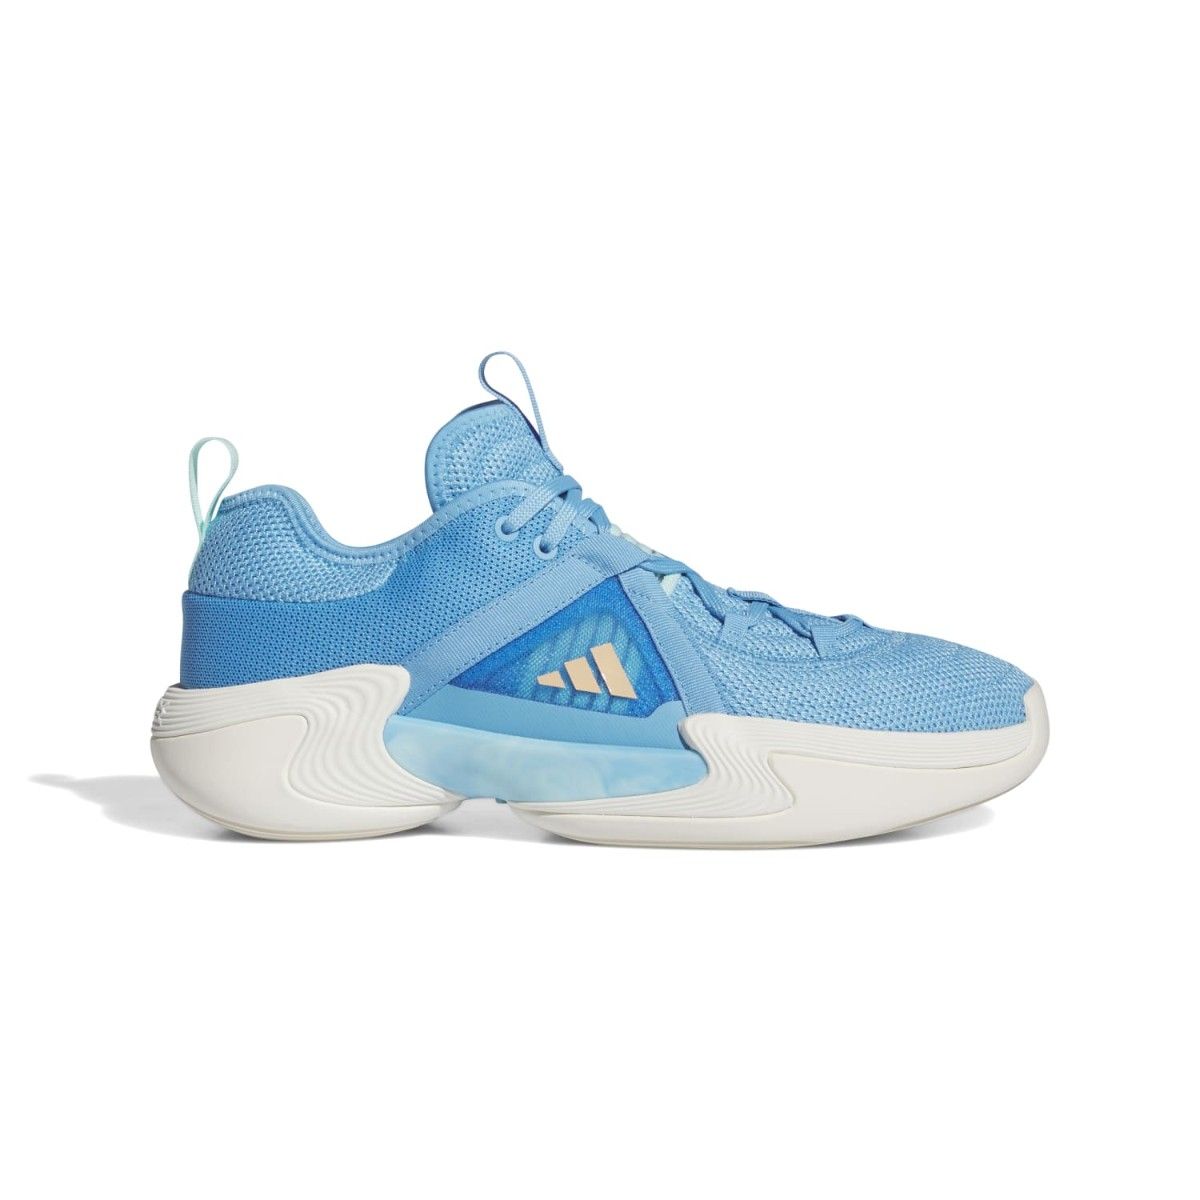 Promo adidas Women Basketball Shoes Hoops 3.0 Sepatu Basket Wanita [IG7894]  Diskon 10% di Seller adidas Sports Official Store - Gudang Blibli | Blibli